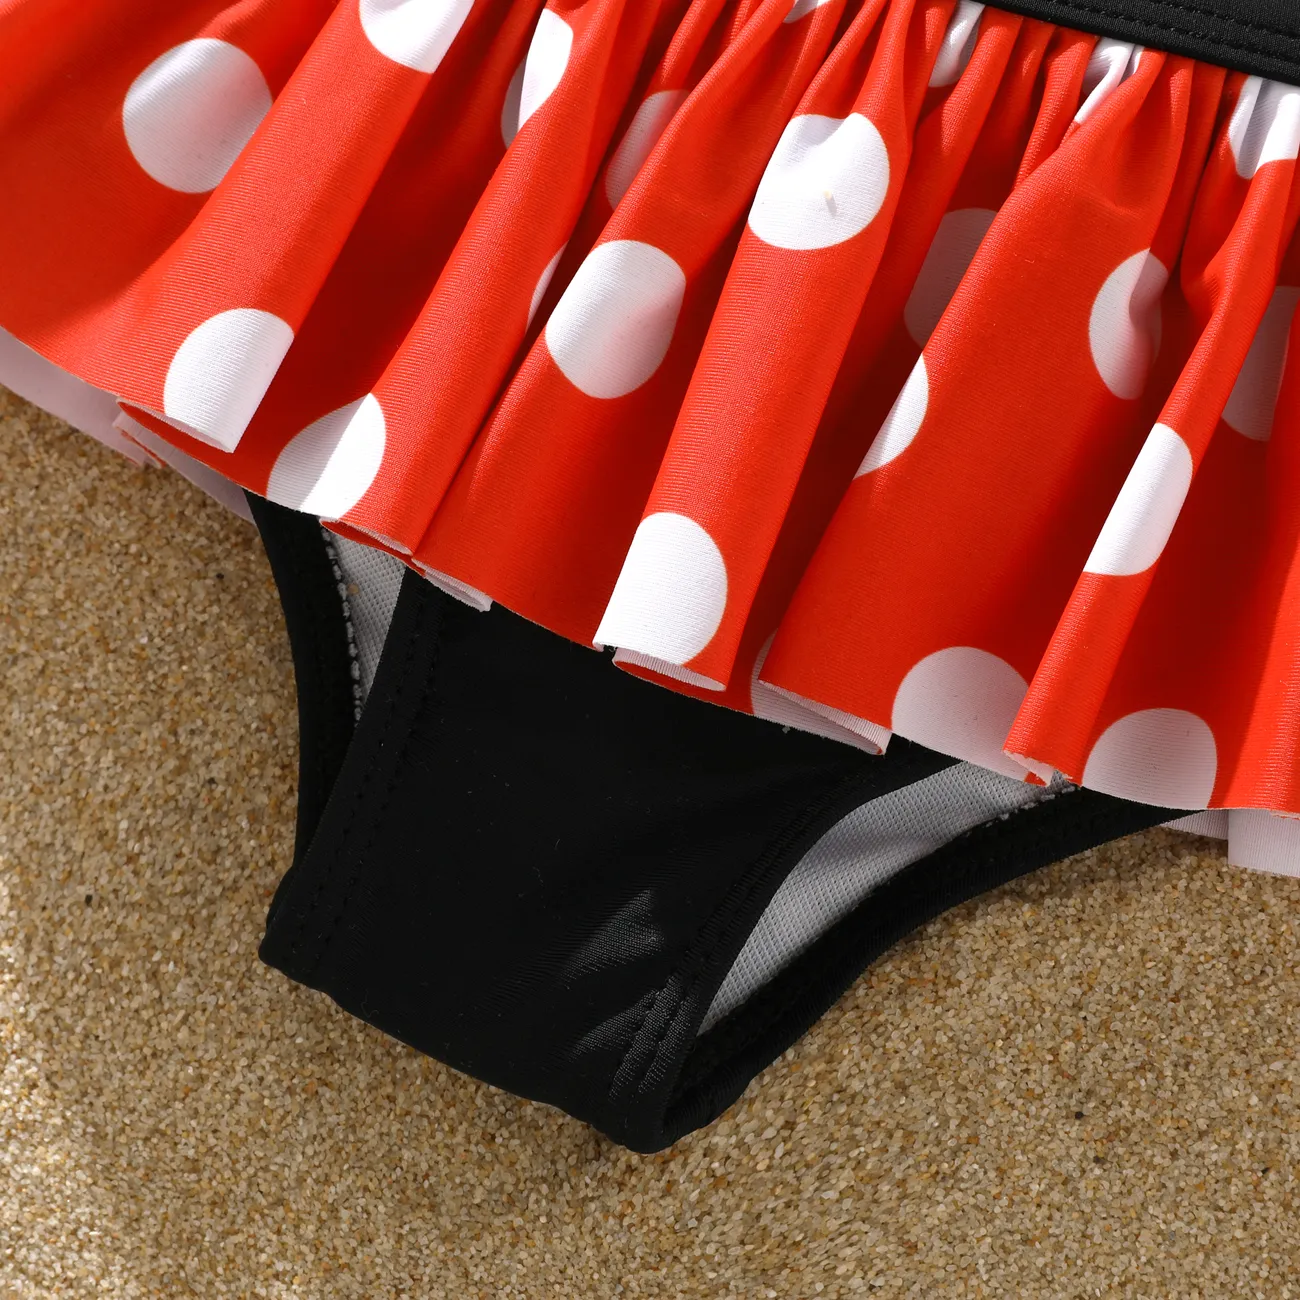 Baby Girl Hyper-Tactile 3D Polka Dot Swimwear Set Red big image 1